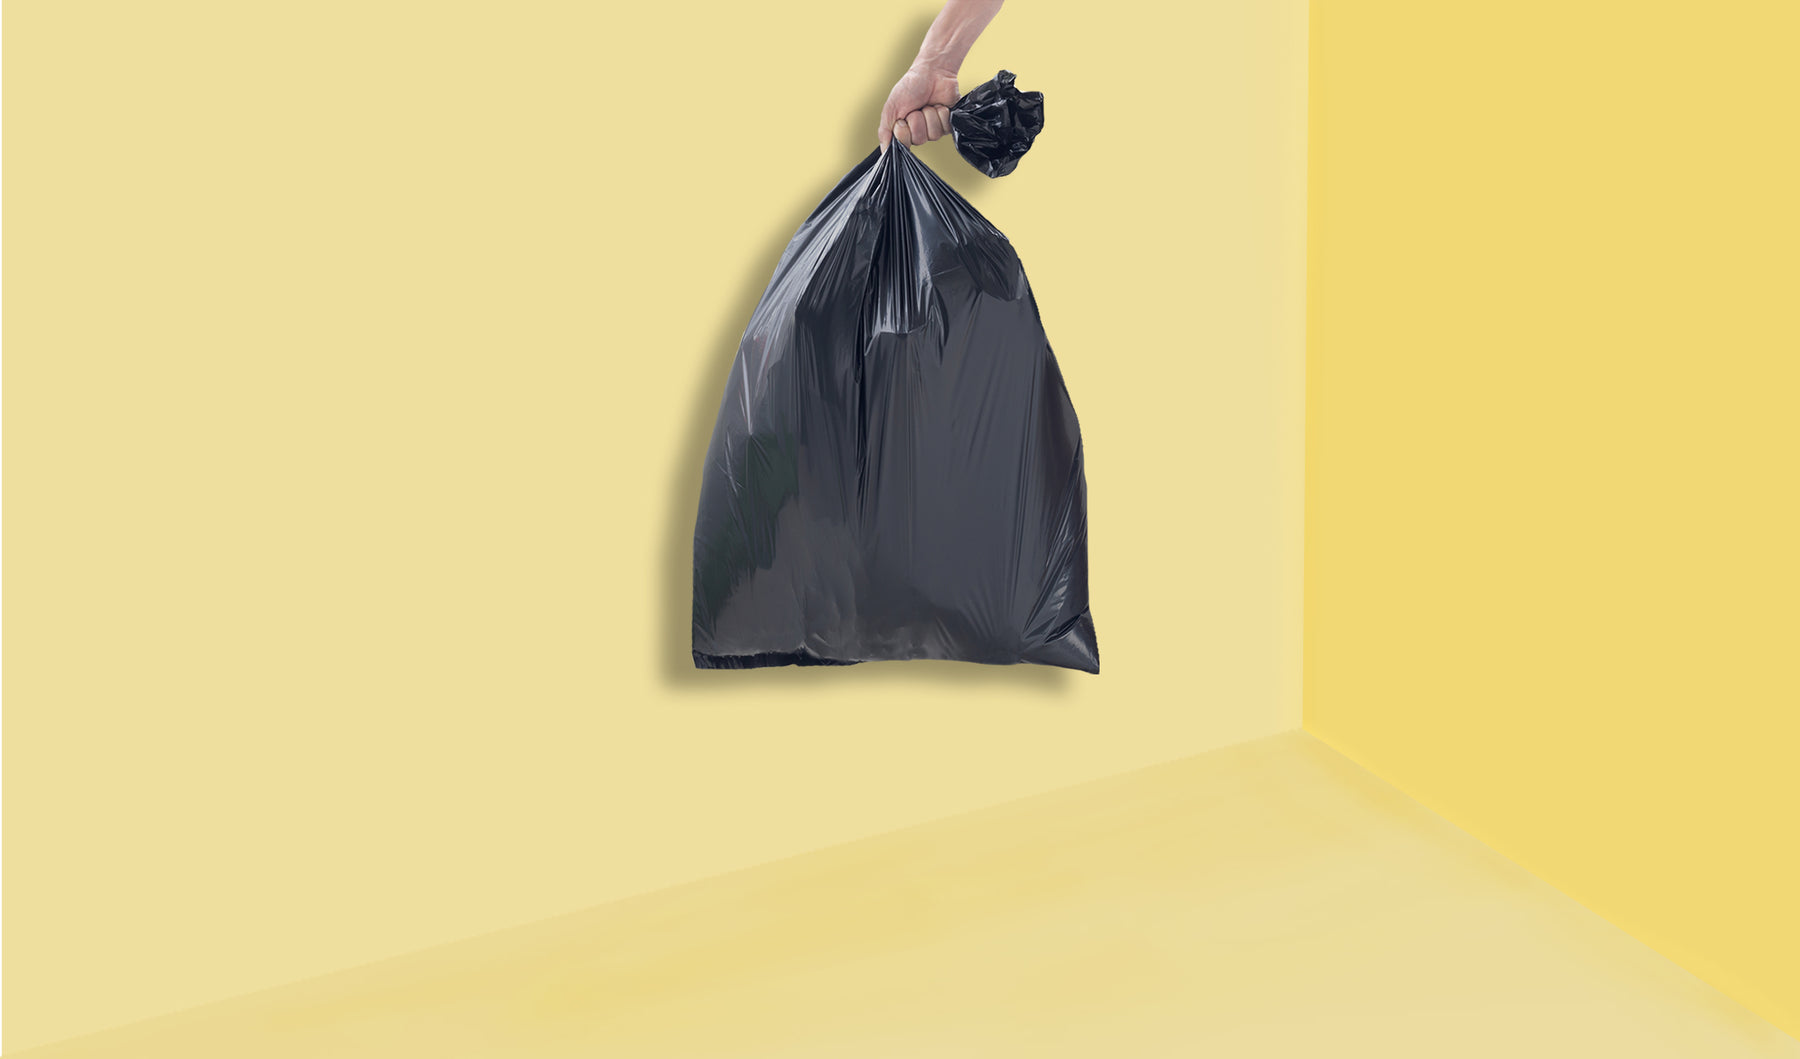 Heavy Duty Eco Black Big Trash Bags 55-60 Gallon Plastic Garden